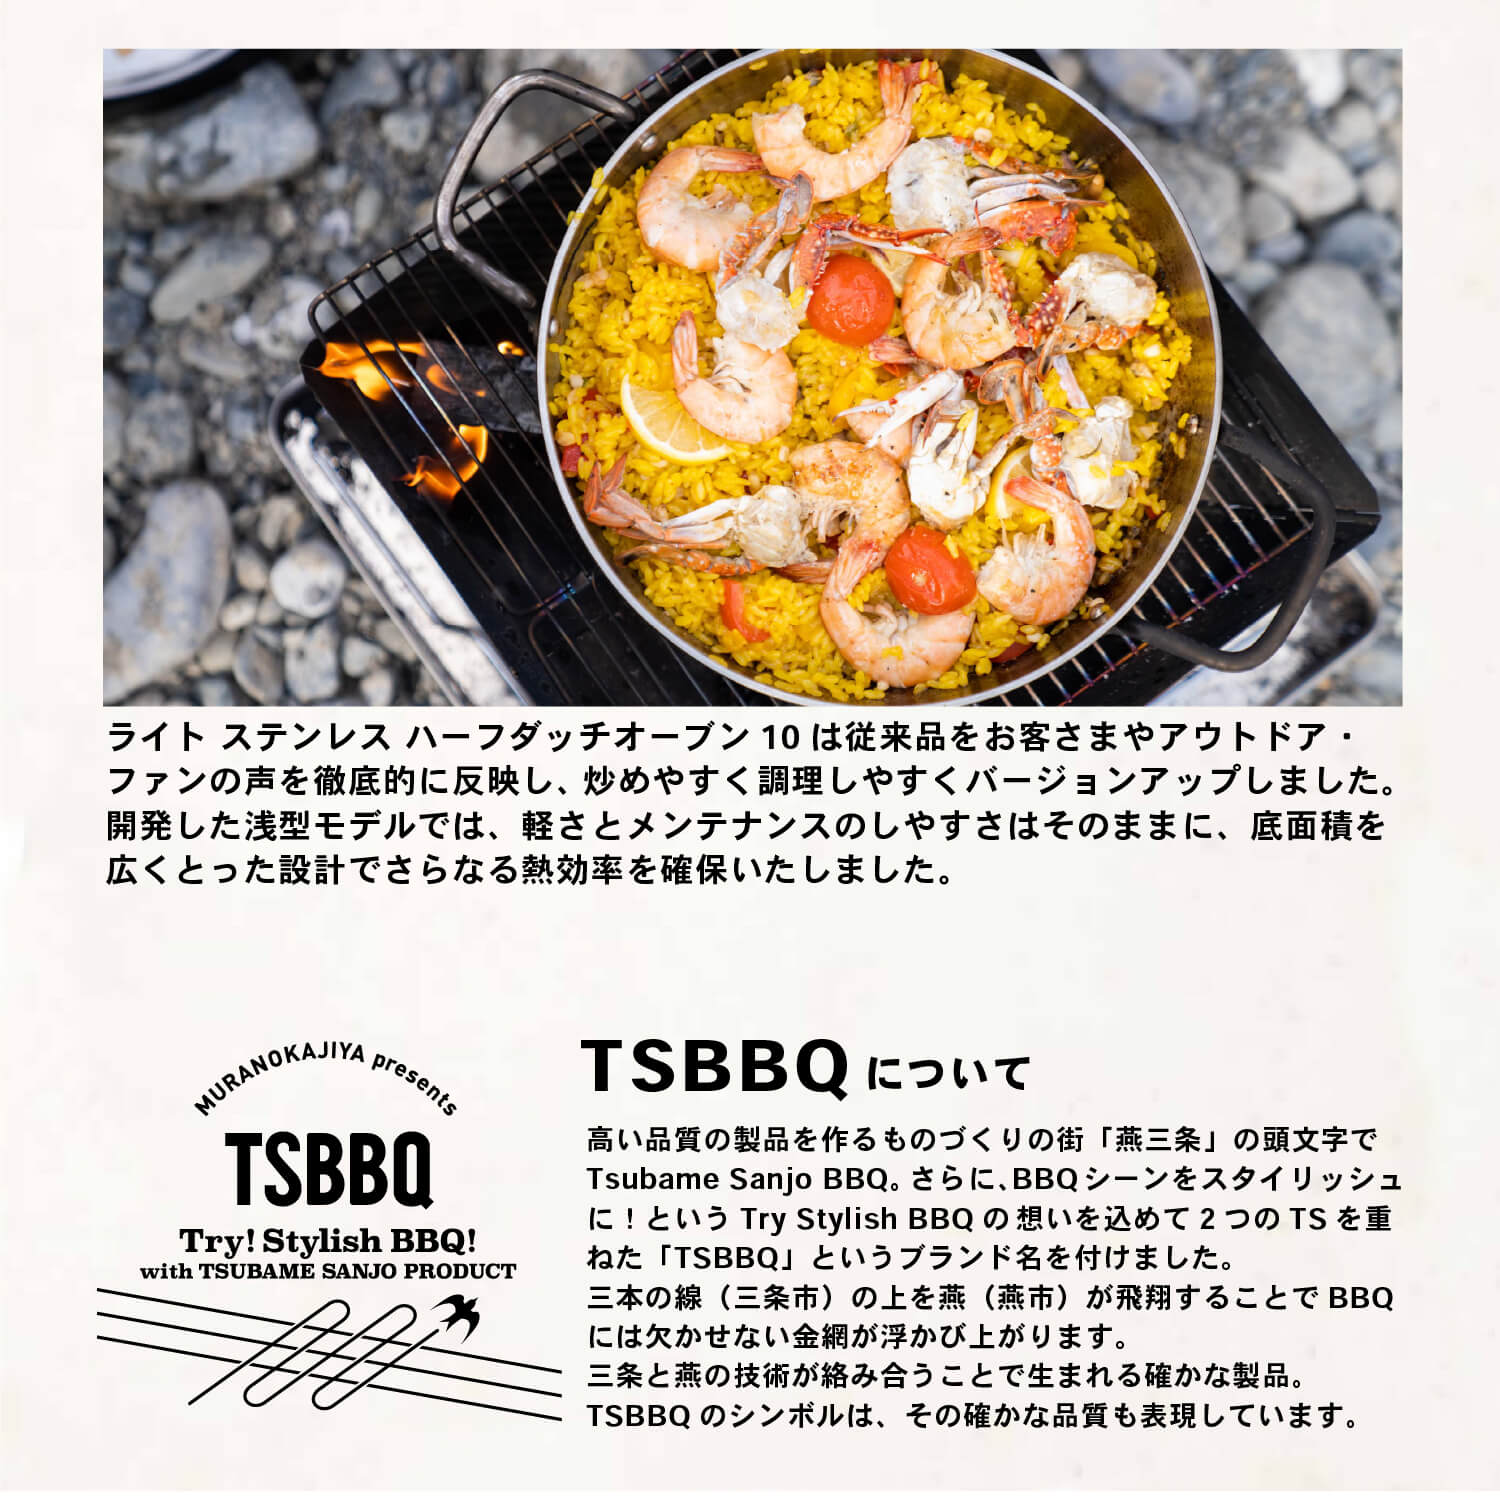 TSBBQ ライトステンレス ダッチオーブン(無水鍋) 10インチ ミラー仕上げ TSBBQ-005 (底網付) - 2